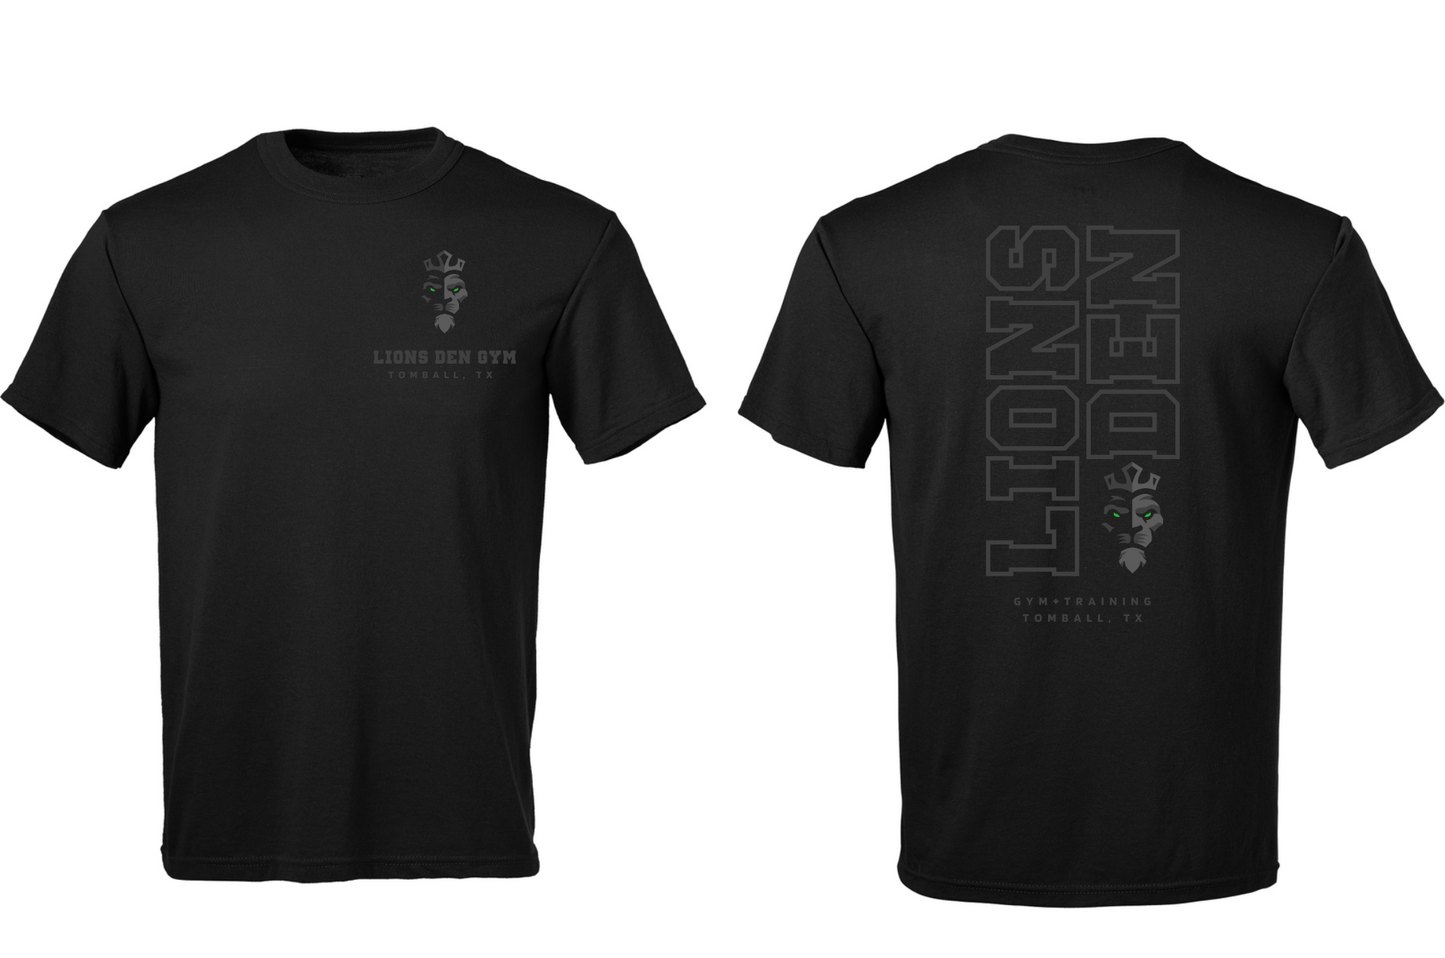 Lions Den Gym T-Shirt : 005